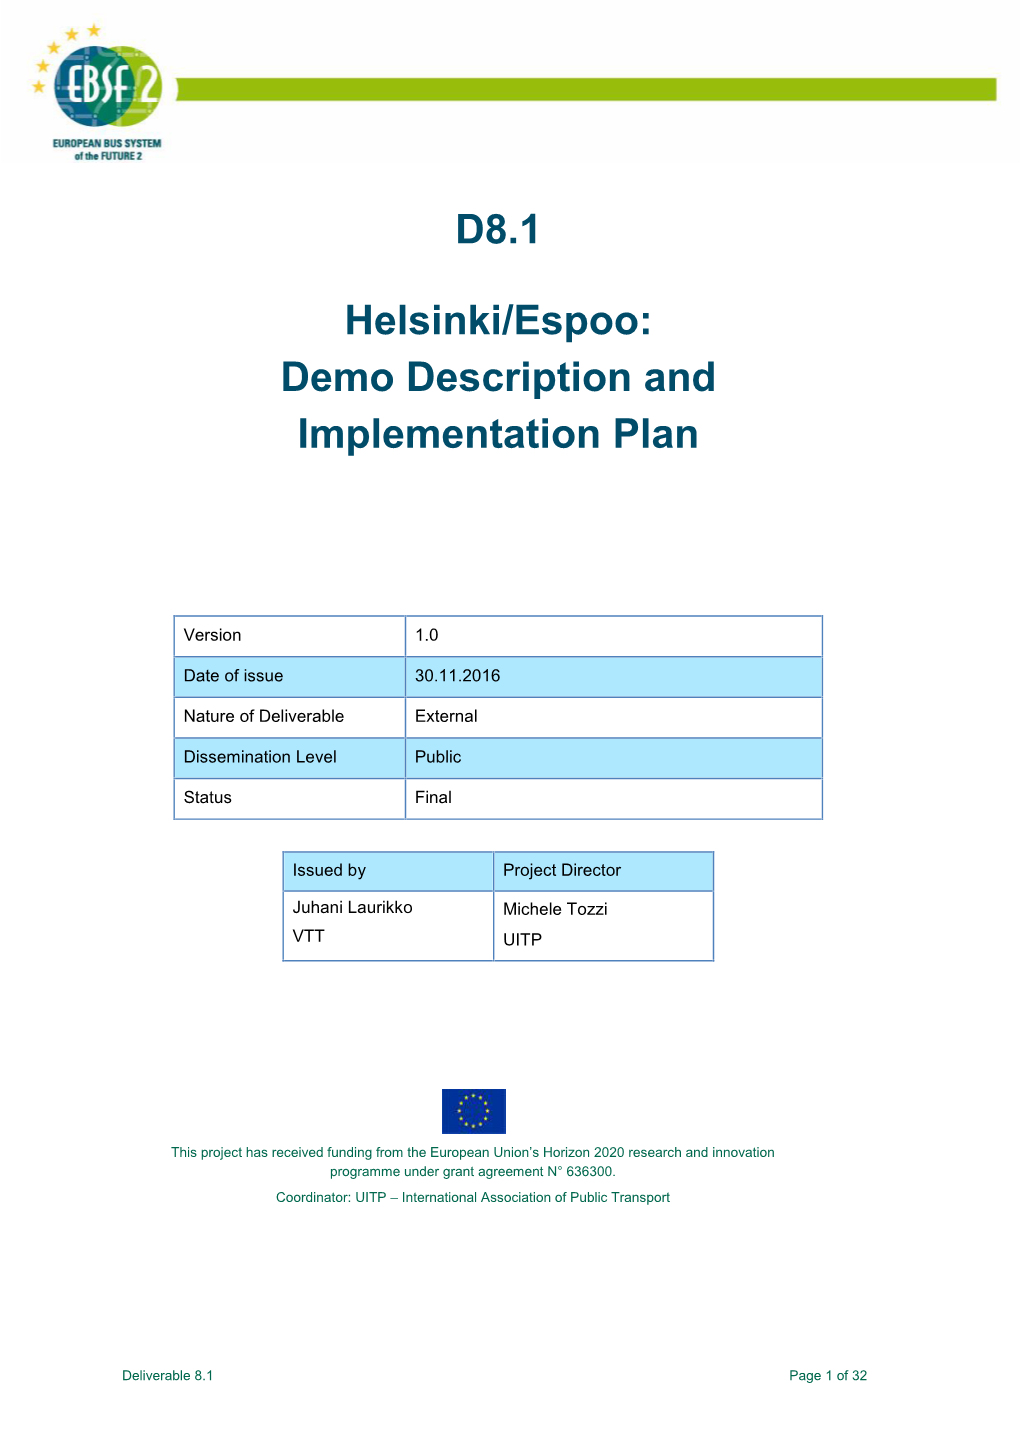 D8.1 Helsinki/Espoo: Demo Description and Implementation Plan